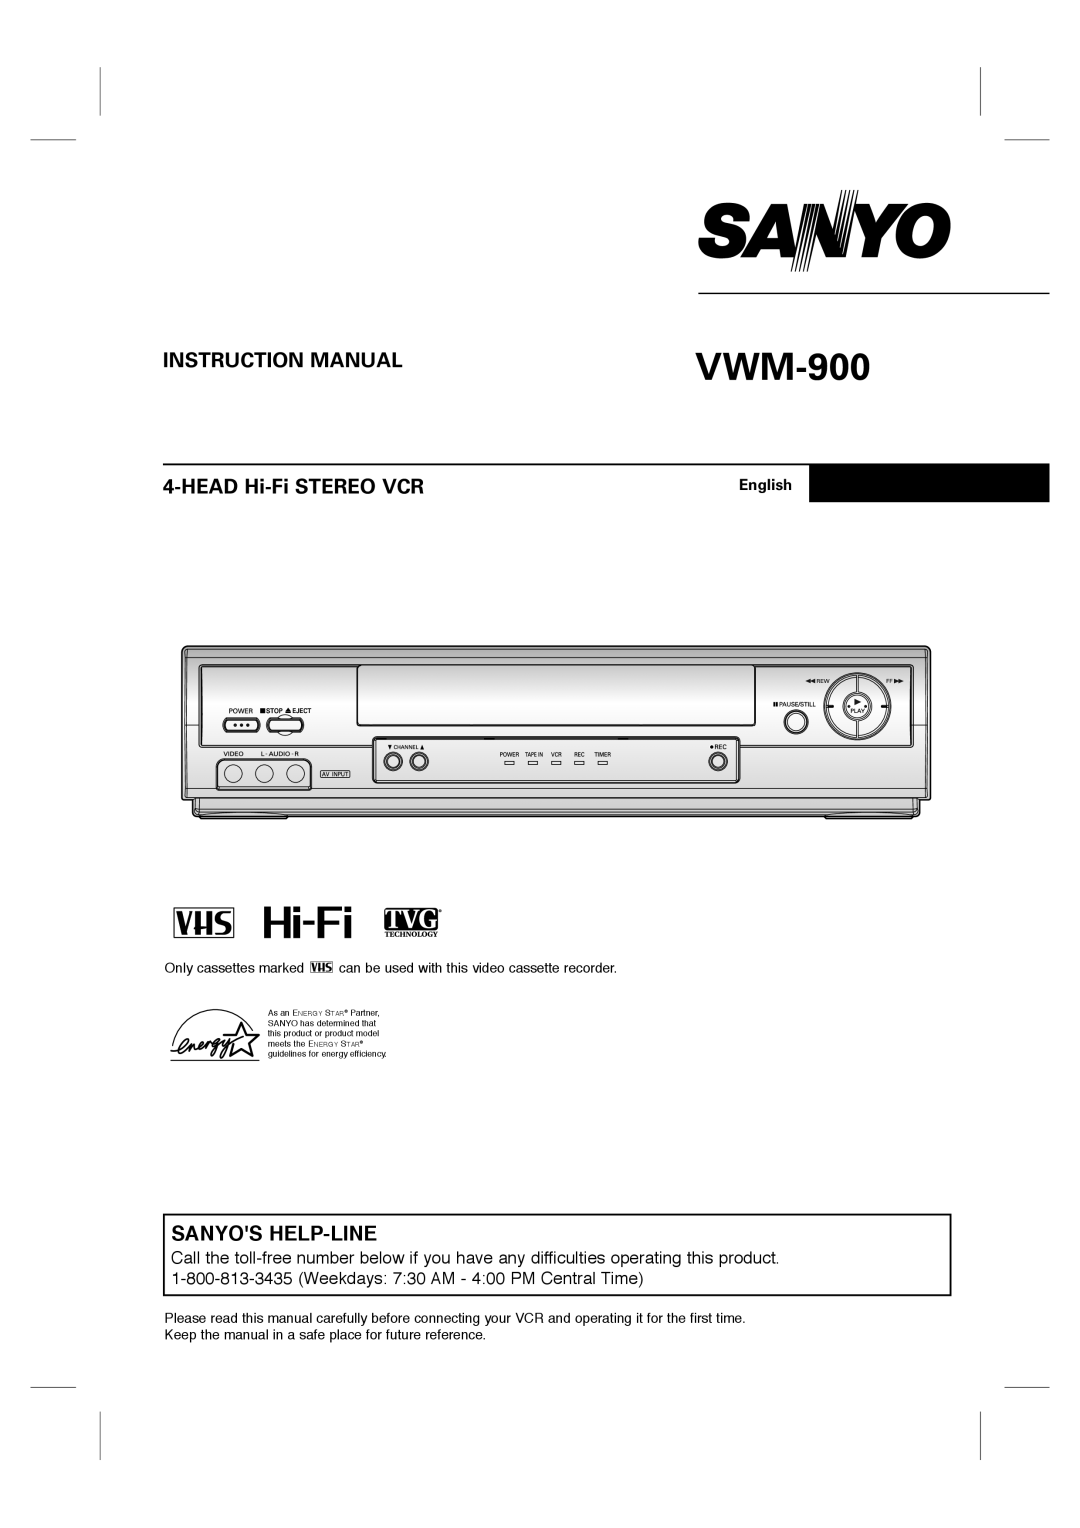 Sanyo VWM-900 instruction manual Sanyos Help-Line, Instruction Manual, HEAD Hi-Fi STEREO VCR, English 